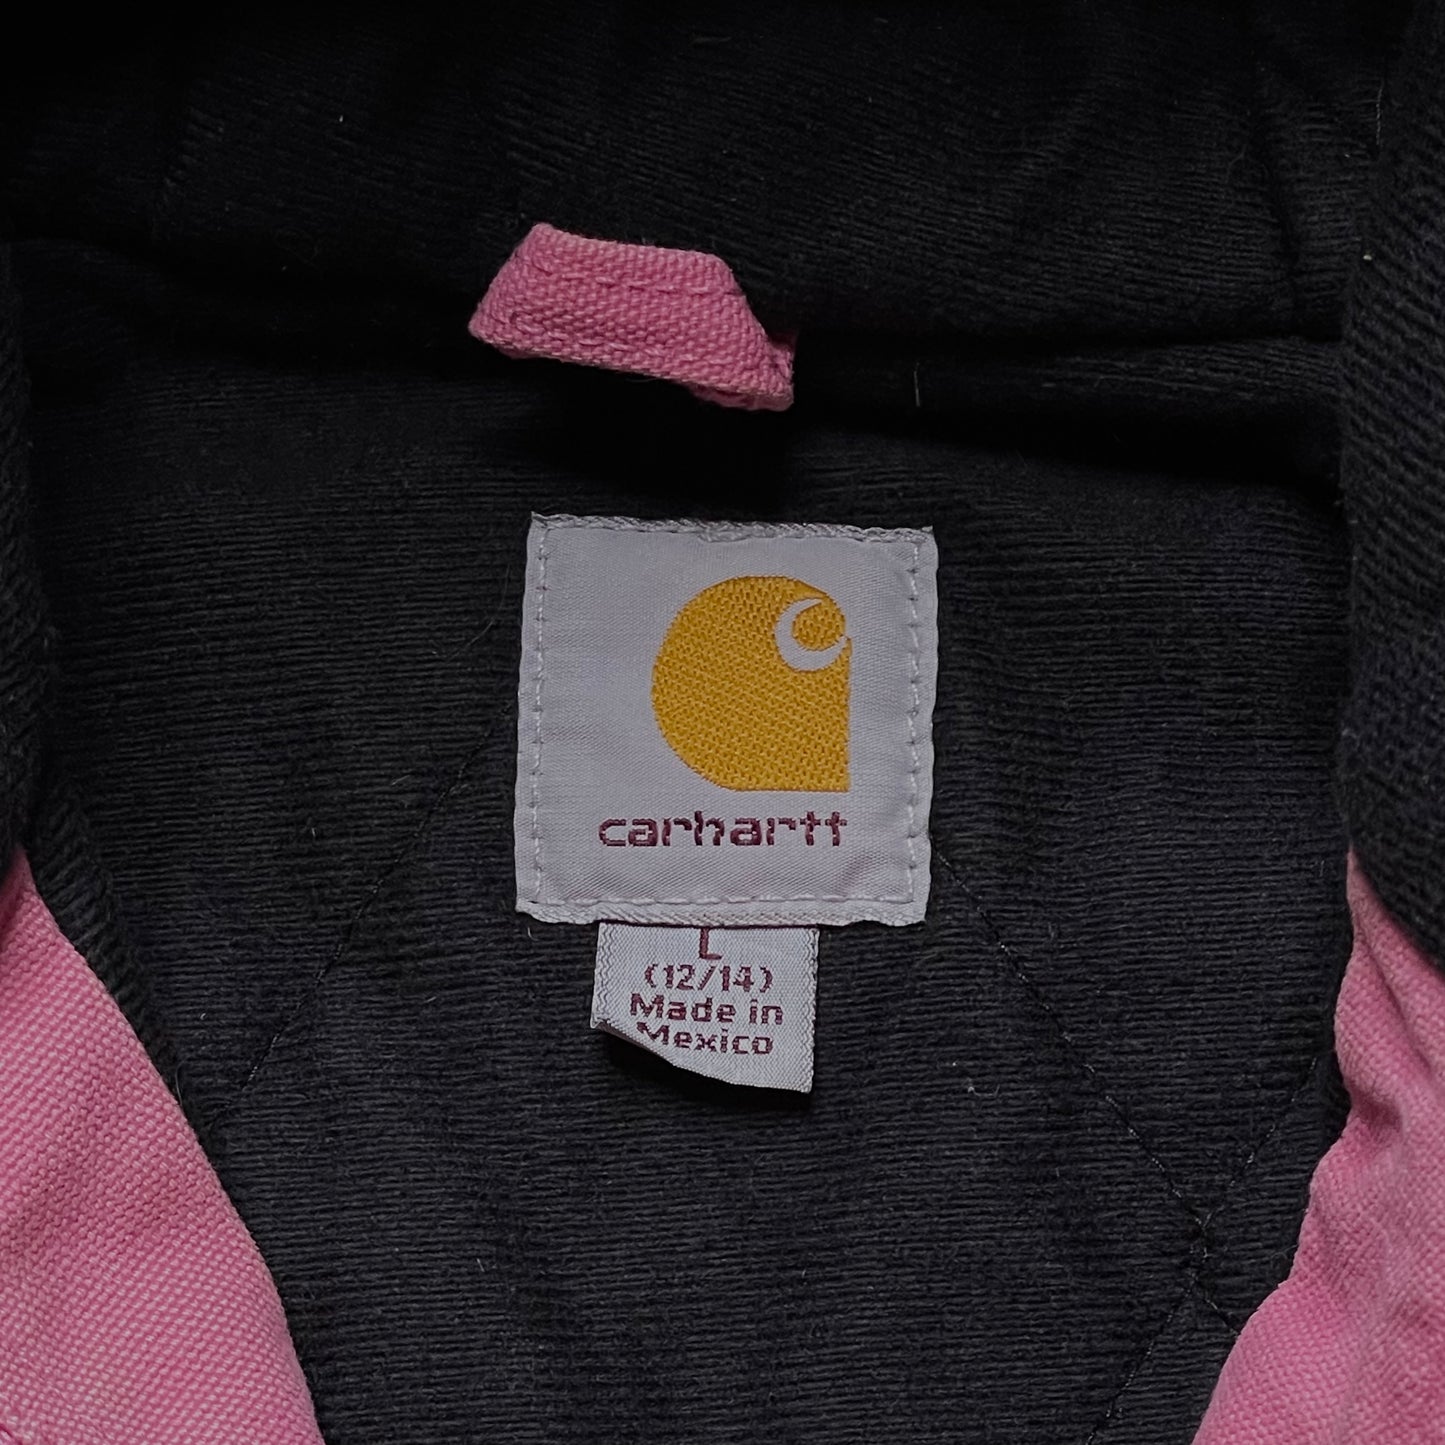 90s Pink Carhartt Jacket (S)